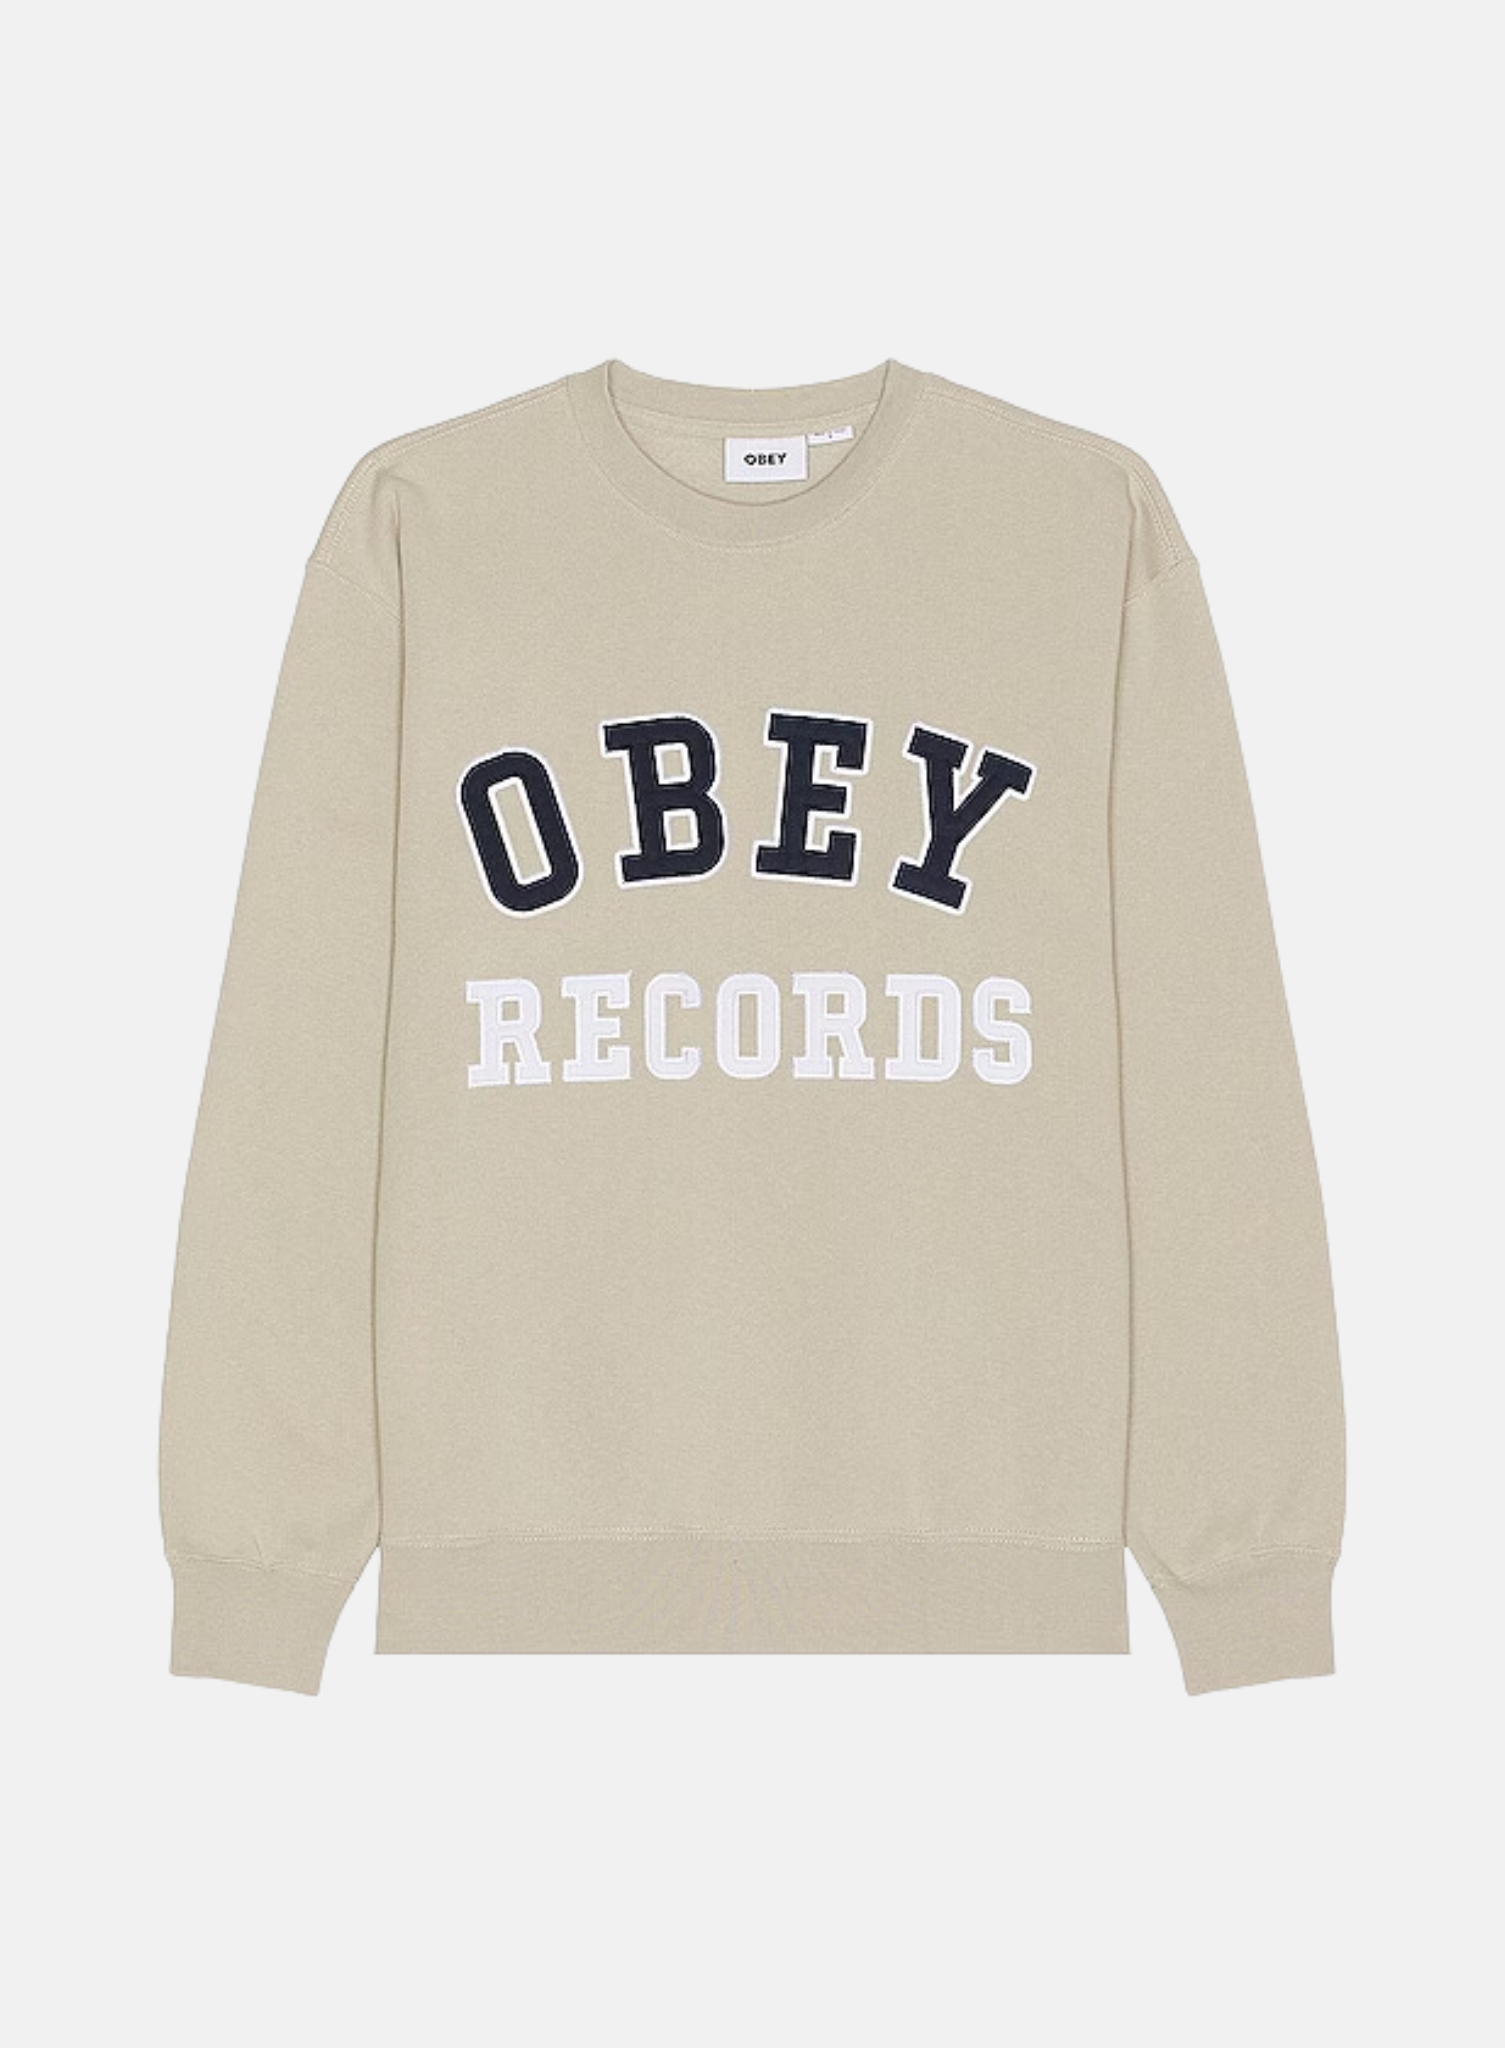 OBEY Records Crewneck Grey - Hympala Store 